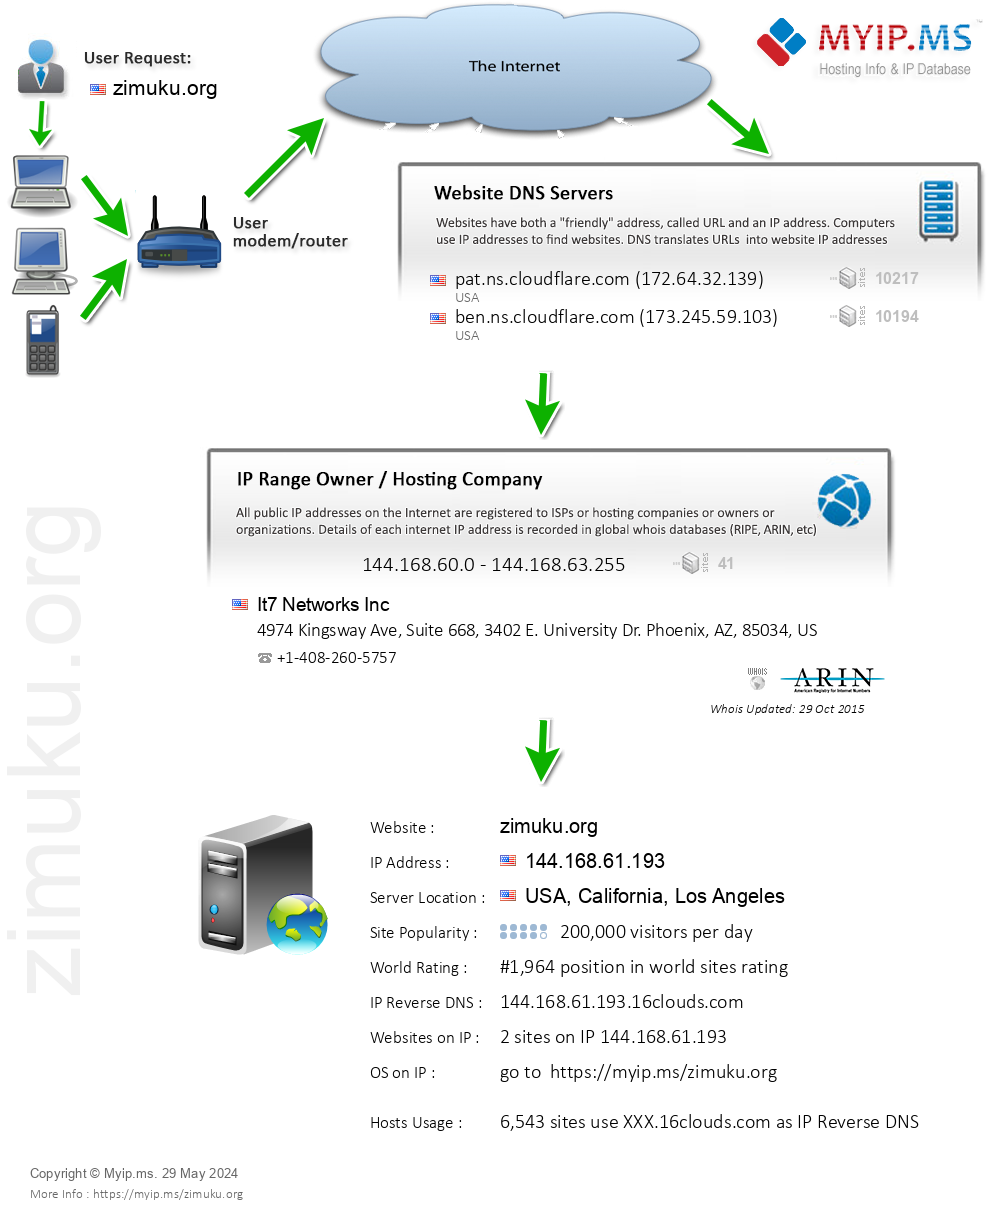 Zimuku.org - Website Hosting Visual IP Diagram